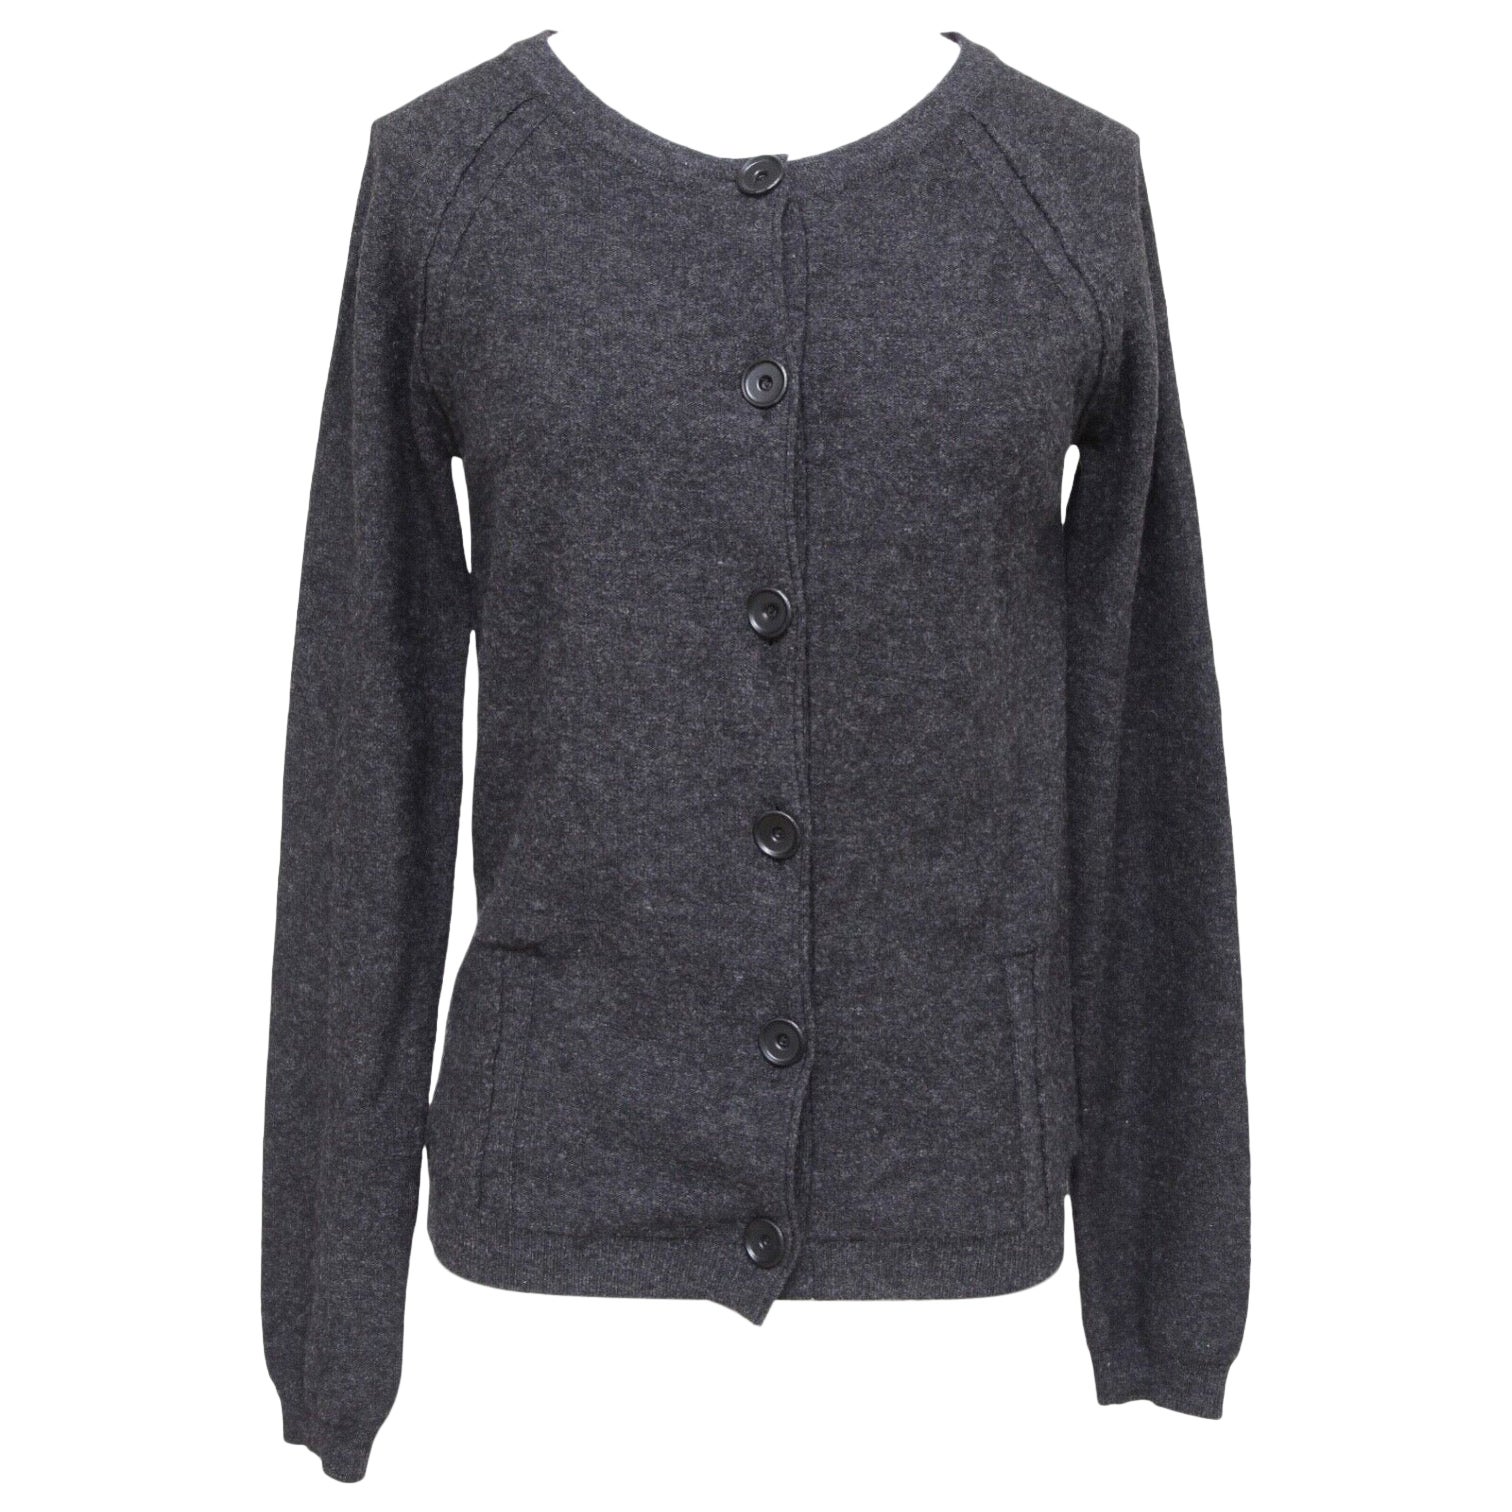 CHLOE Cardigan Sweater Knit Charcoal Grey Wool Long Sleeve Sz XS 2007